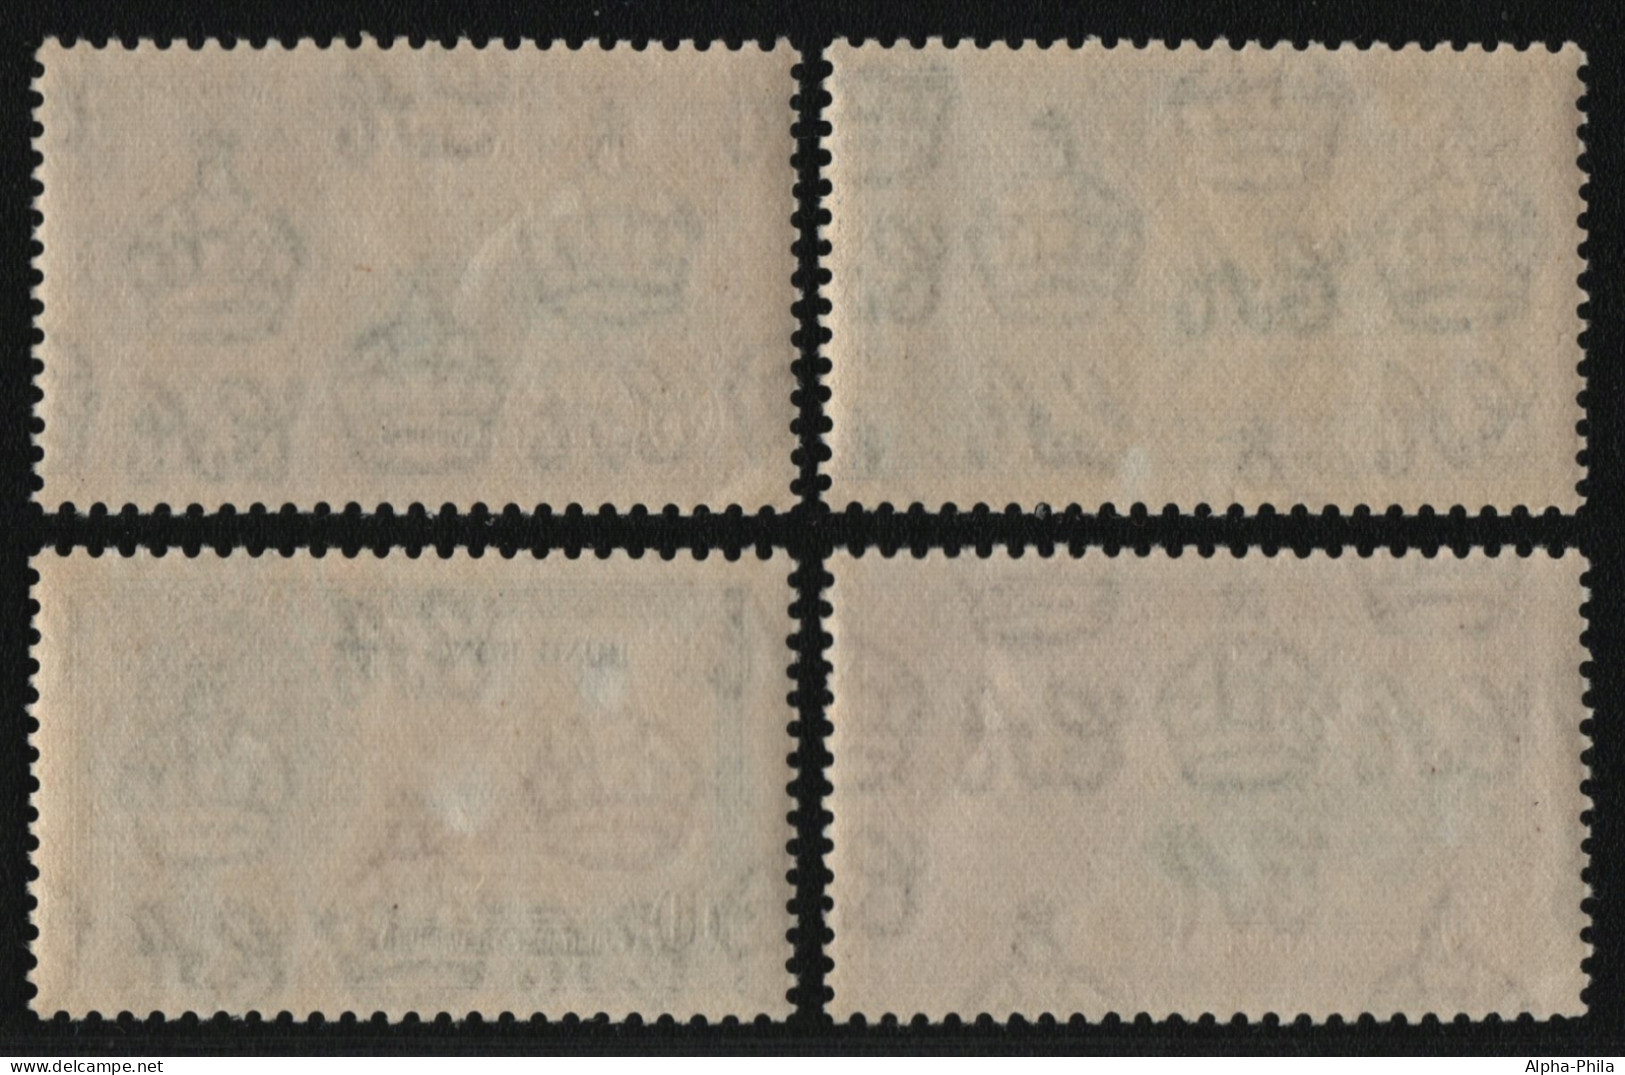 Hongkong 1935 - Mi-Nr. 132-135 ** - MNH - Thronjubiläum George V (II) - Unused Stamps